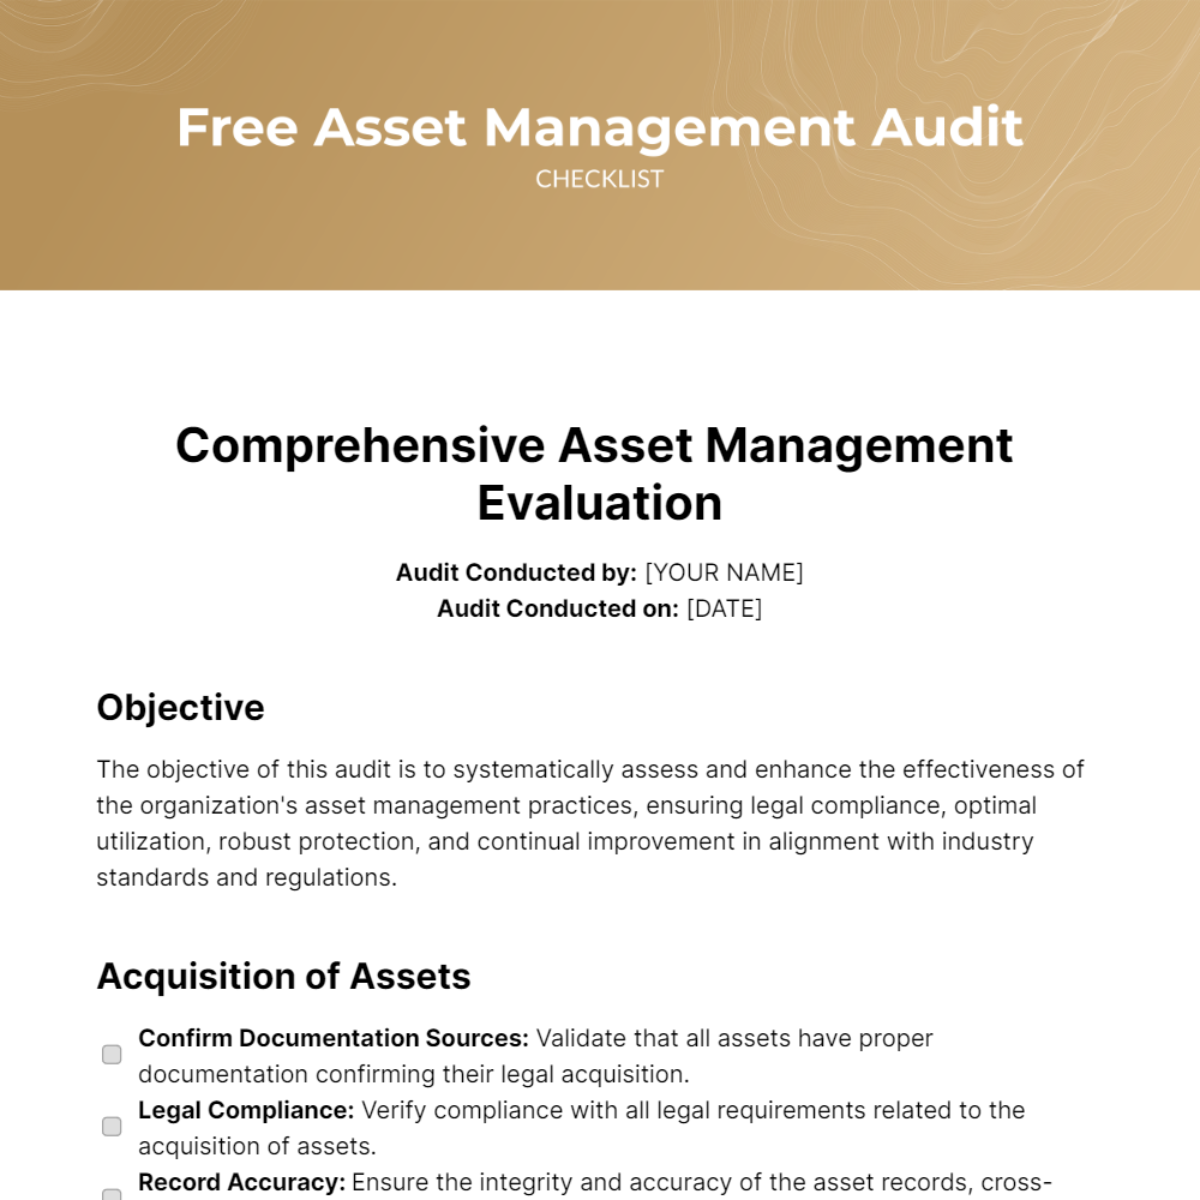 Free Asset Management Audit Checklist Template